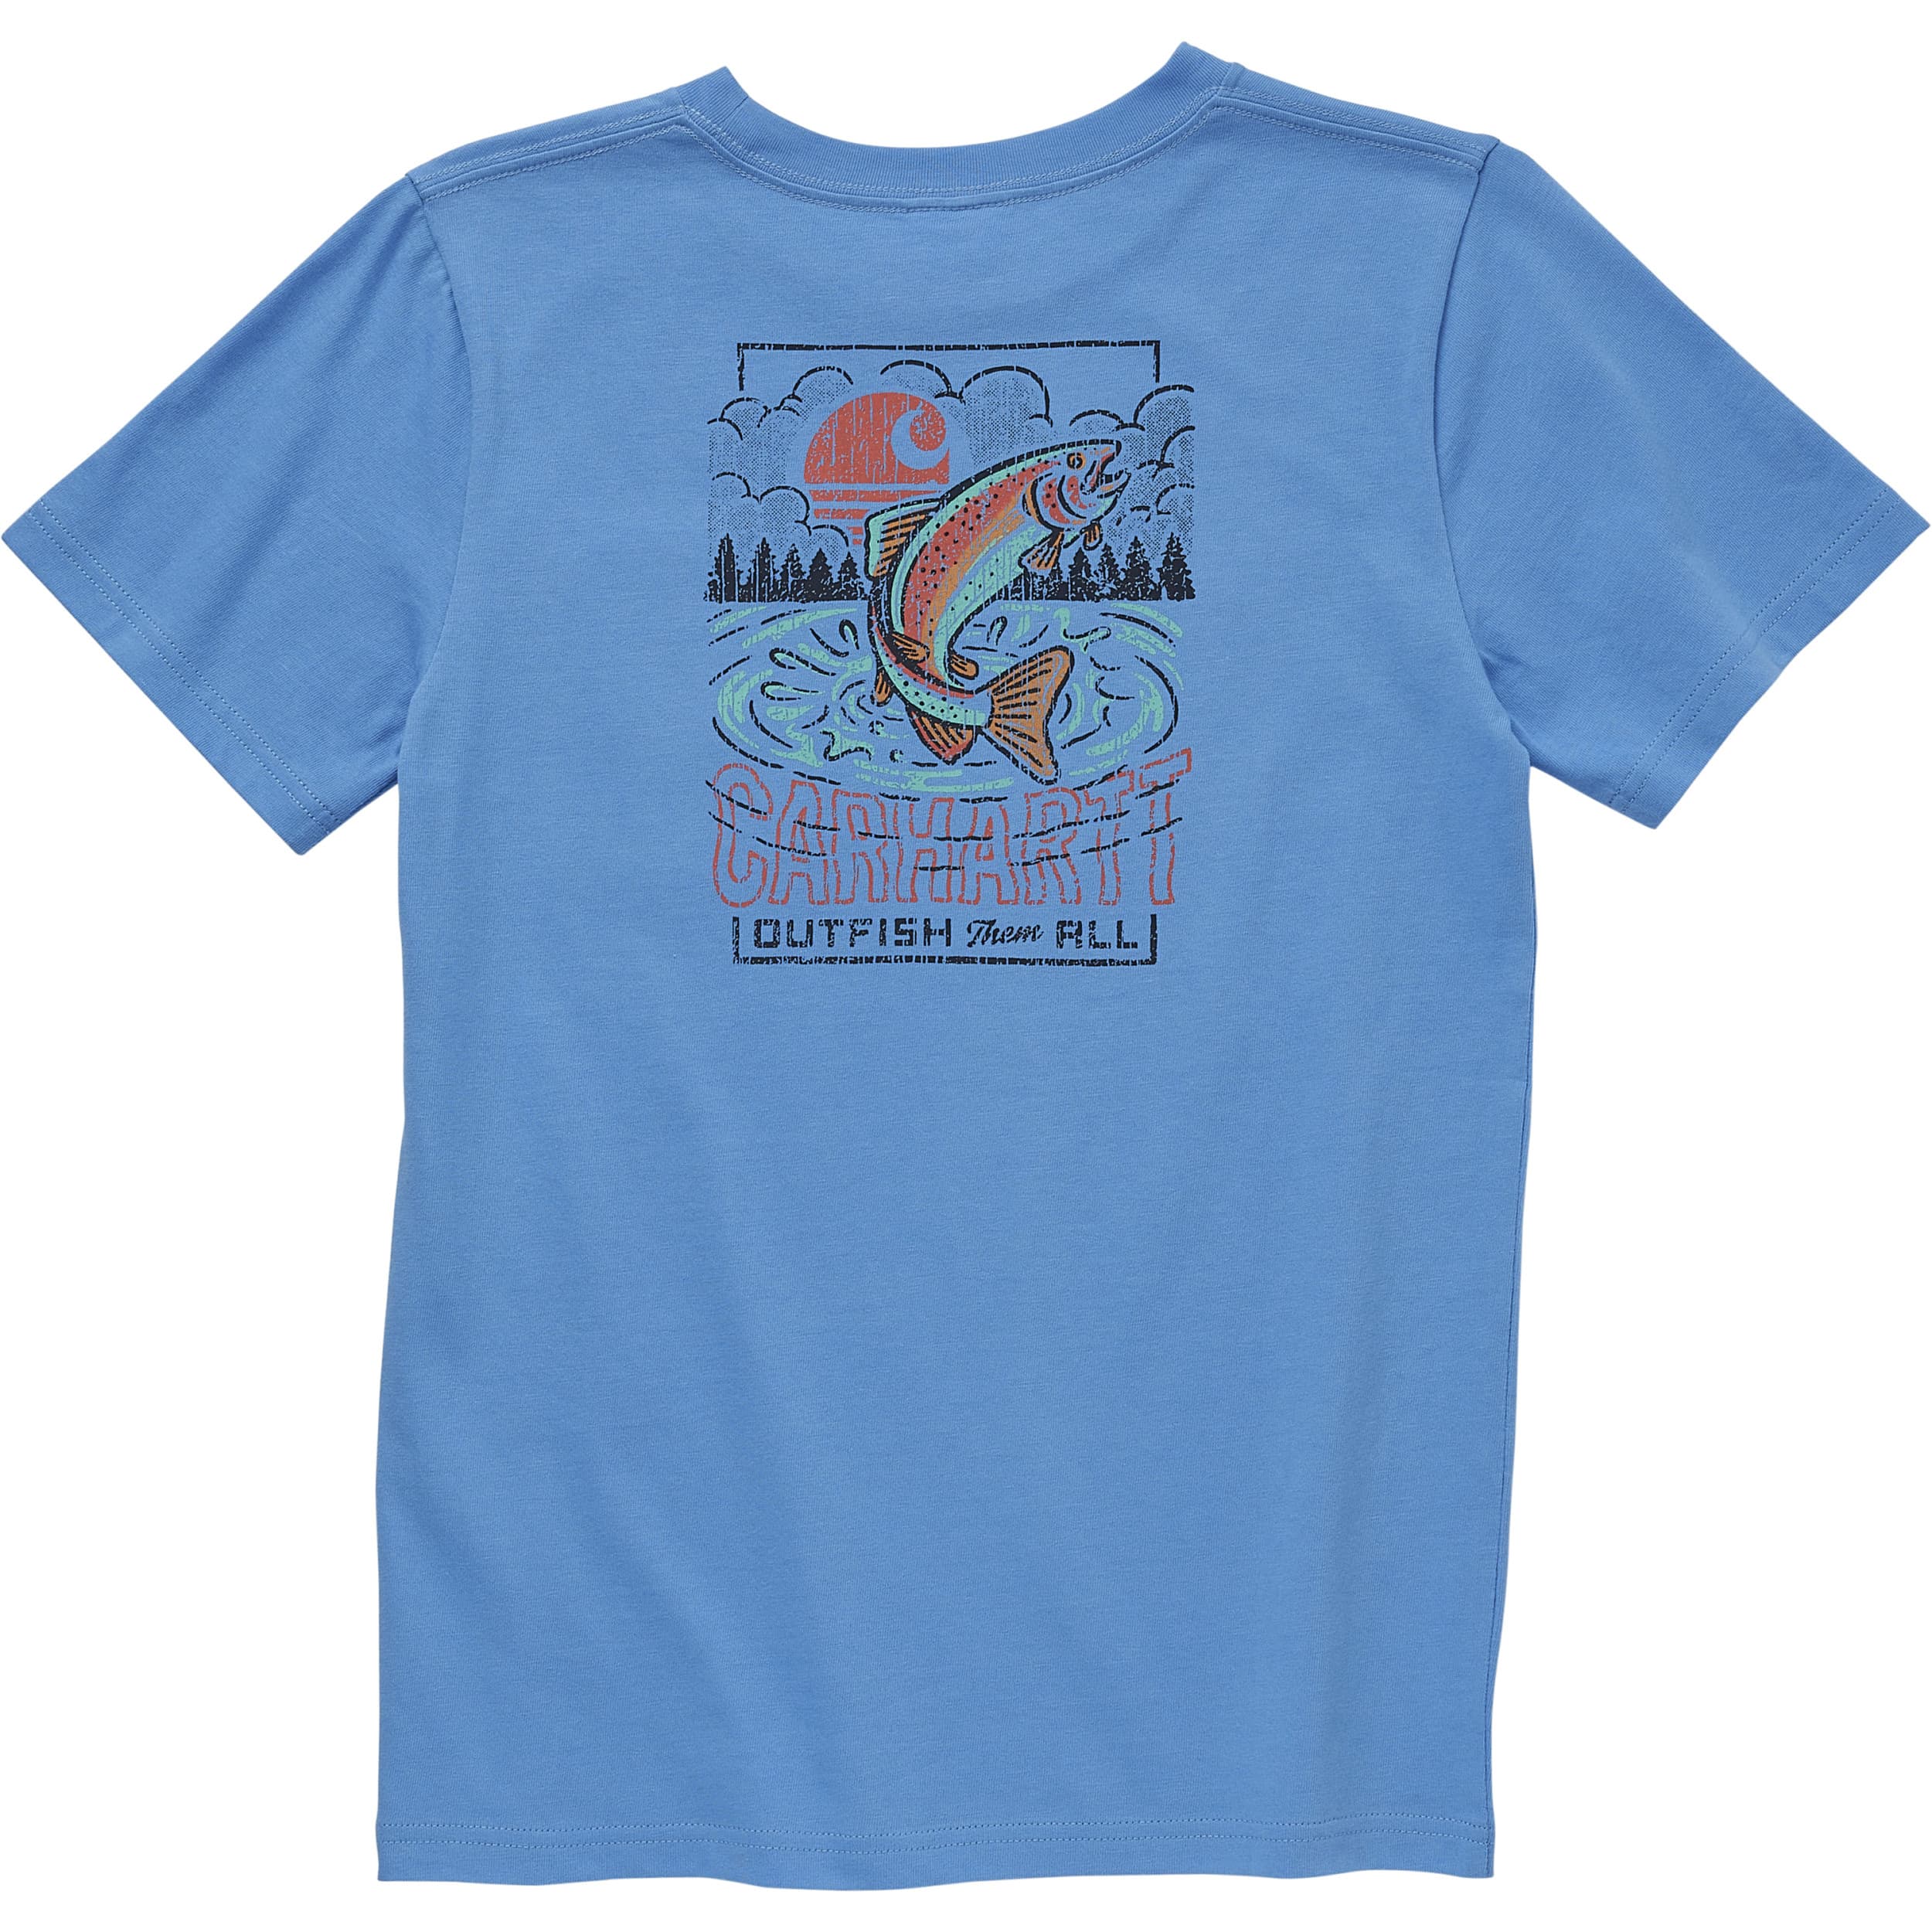 Under Armour Toddler Boys Bass Fish Fishing Shirt Short Set 2T 3T 4T NEW